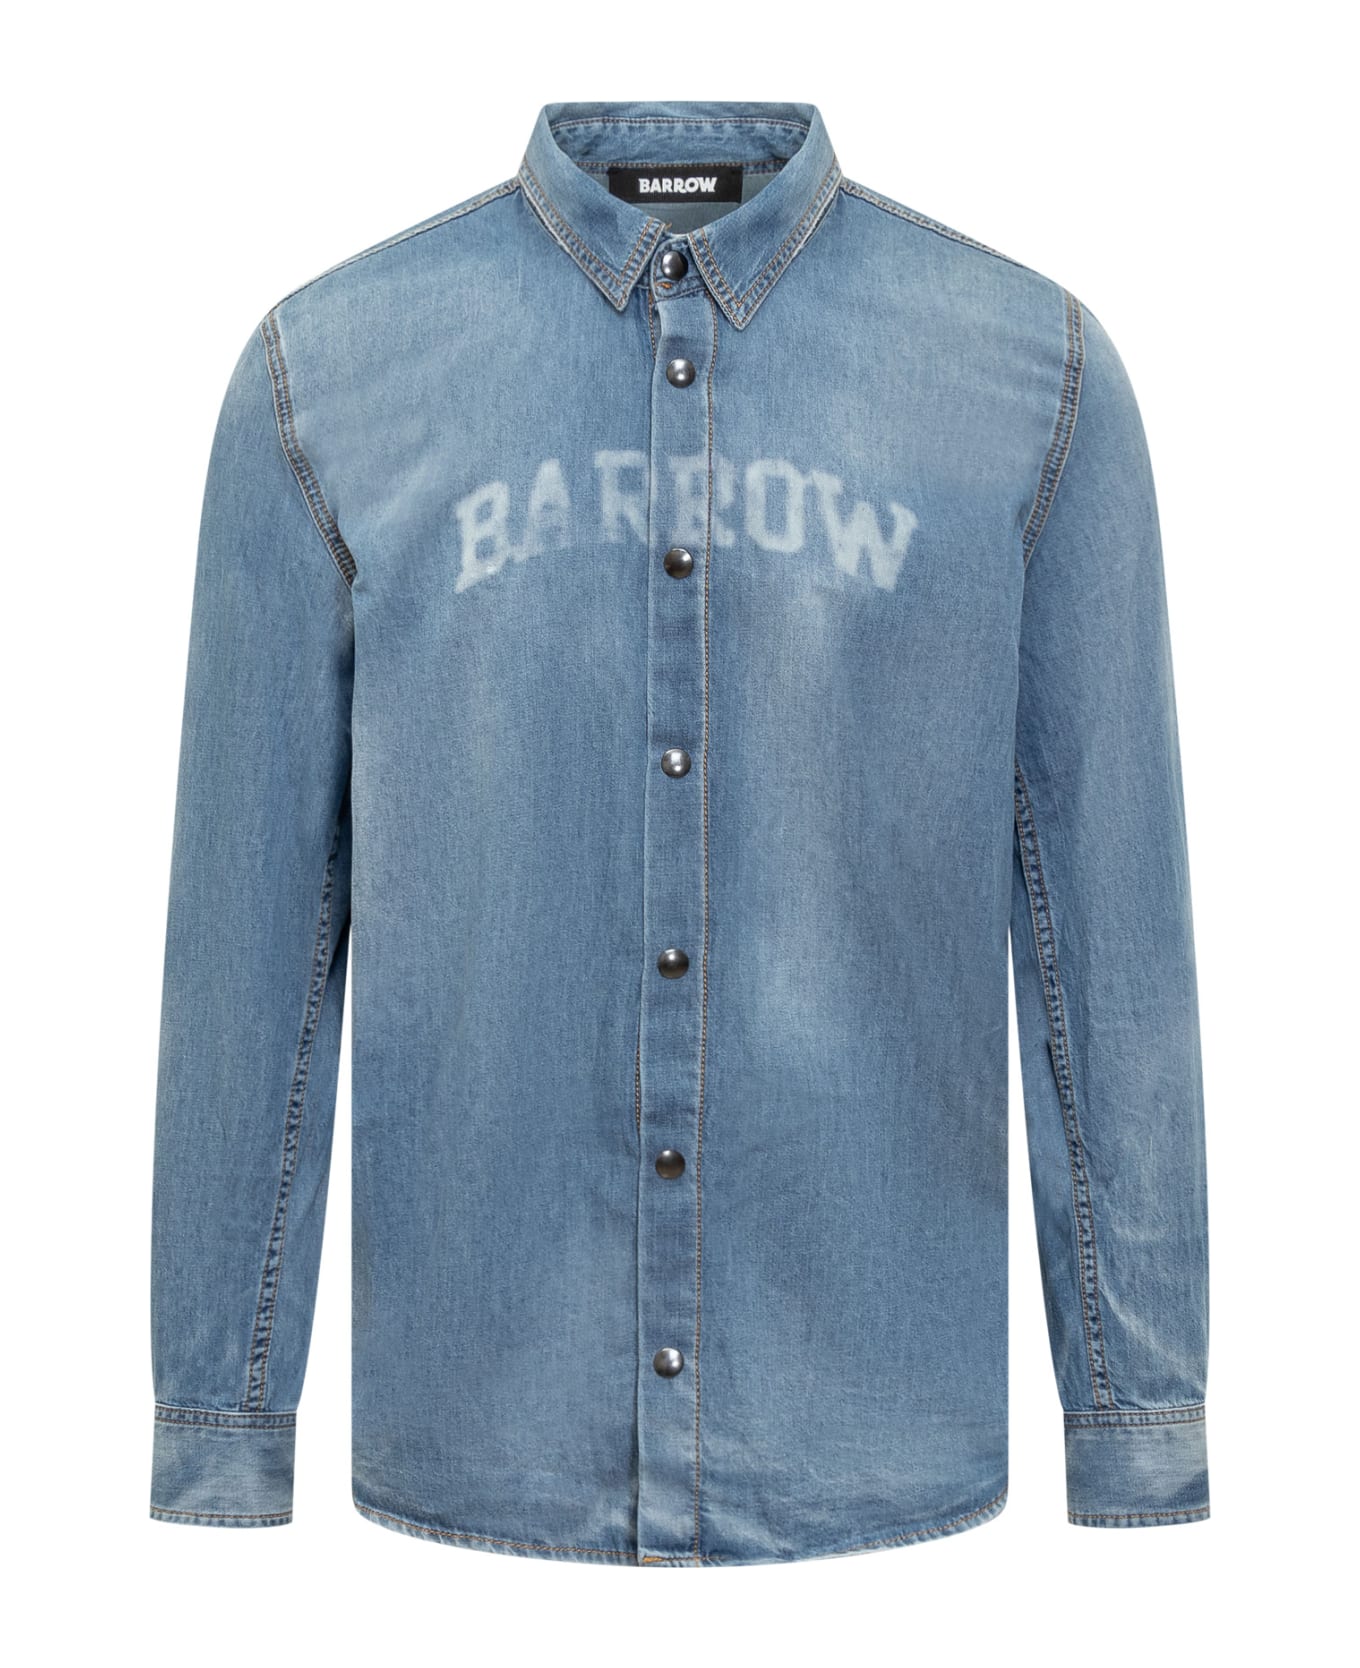 Barrow Denim Shirt - DENIM BLUE シャツ